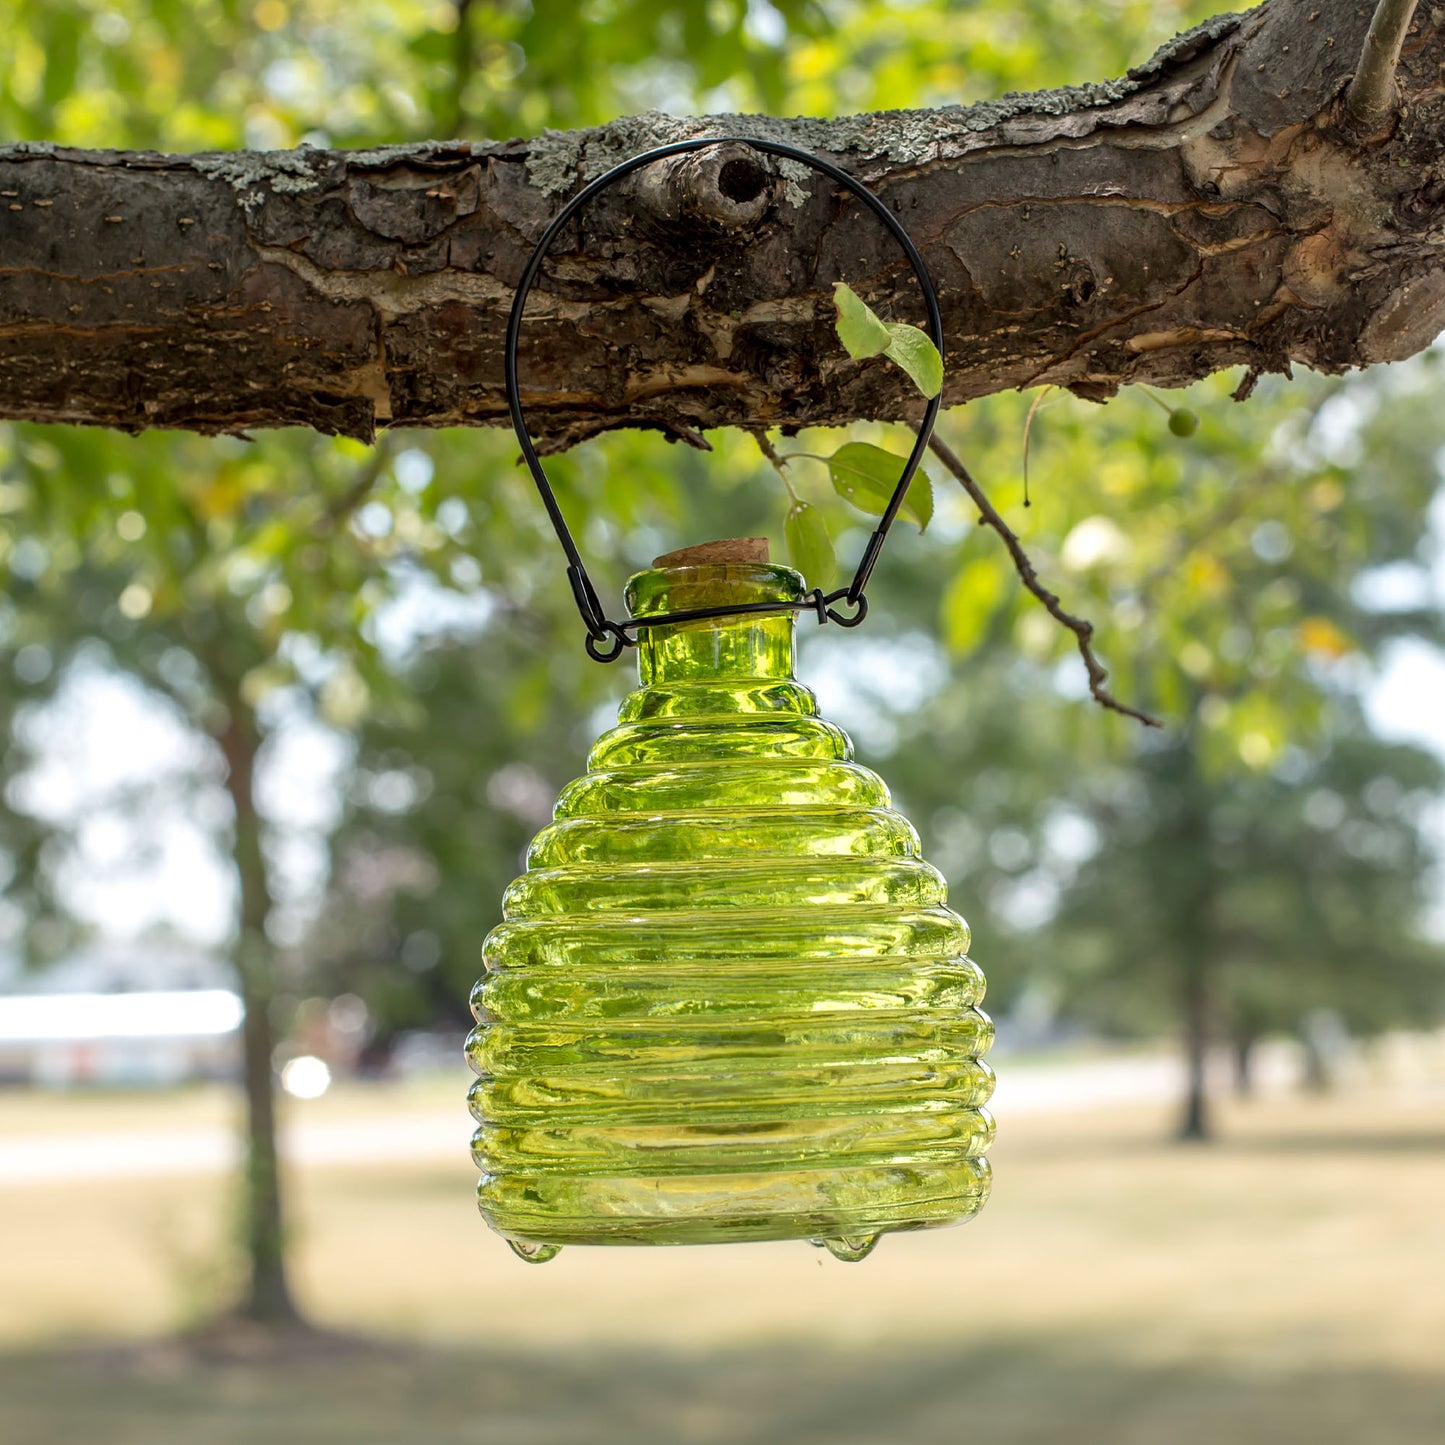 Glass Wasp Trap